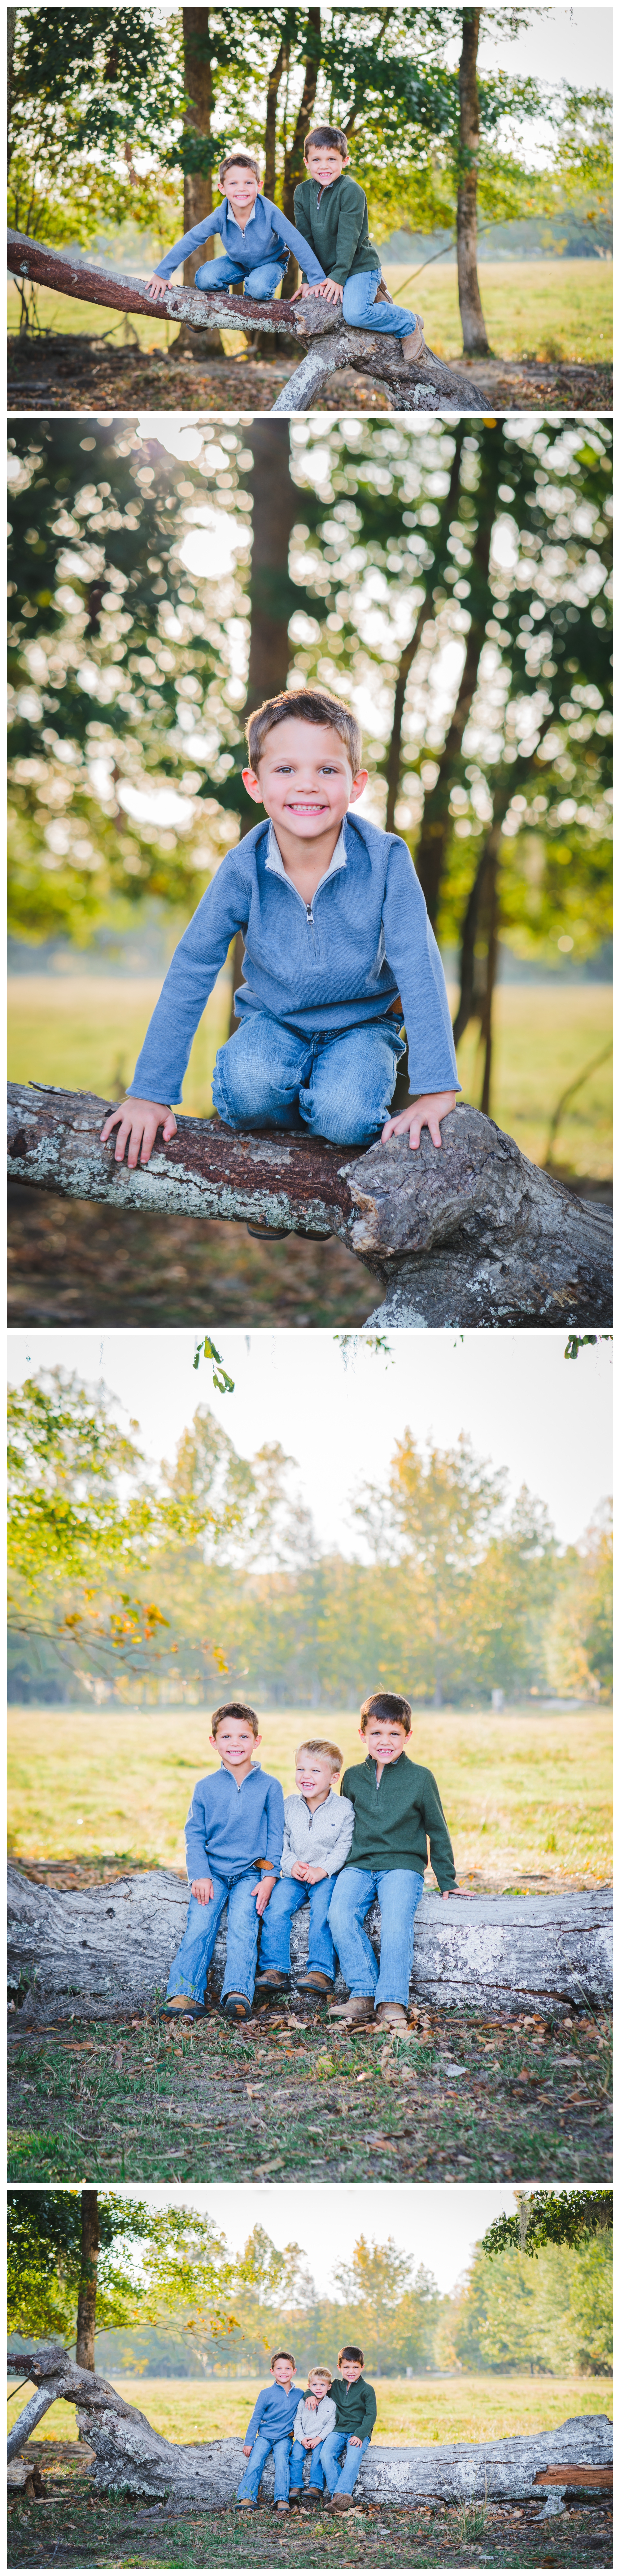 Boys playing outside on a fallen tree | Melissa Sheridan Photography